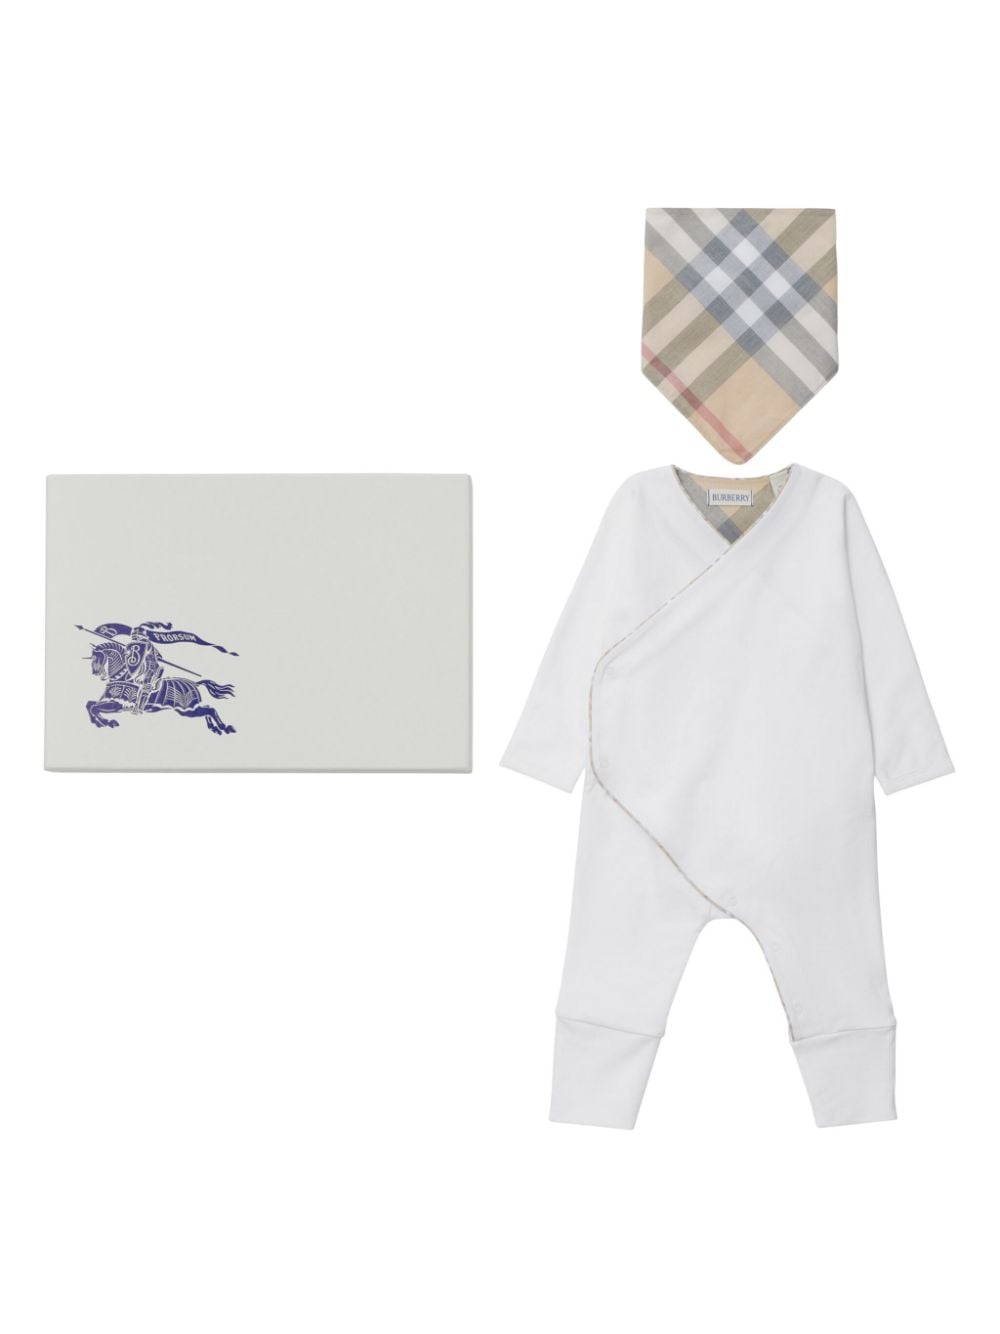 Two-piece set for newborns in white cotton